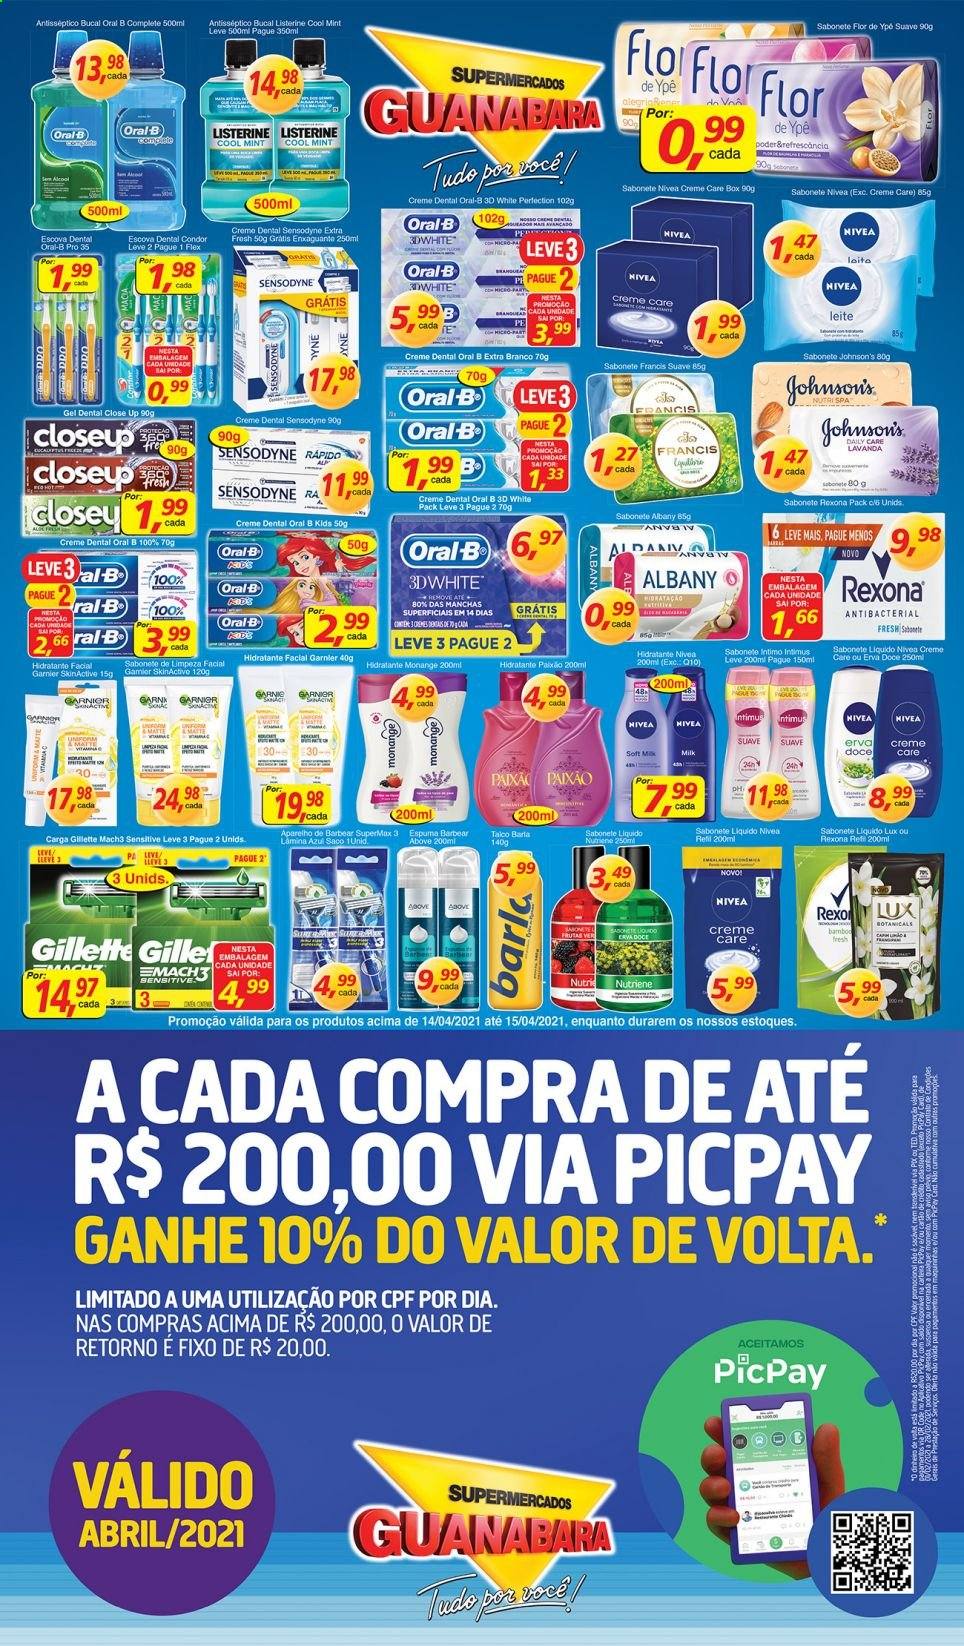 Encarte Supermercados Guanabara  - 14.04.2021 - 15.04.2021.